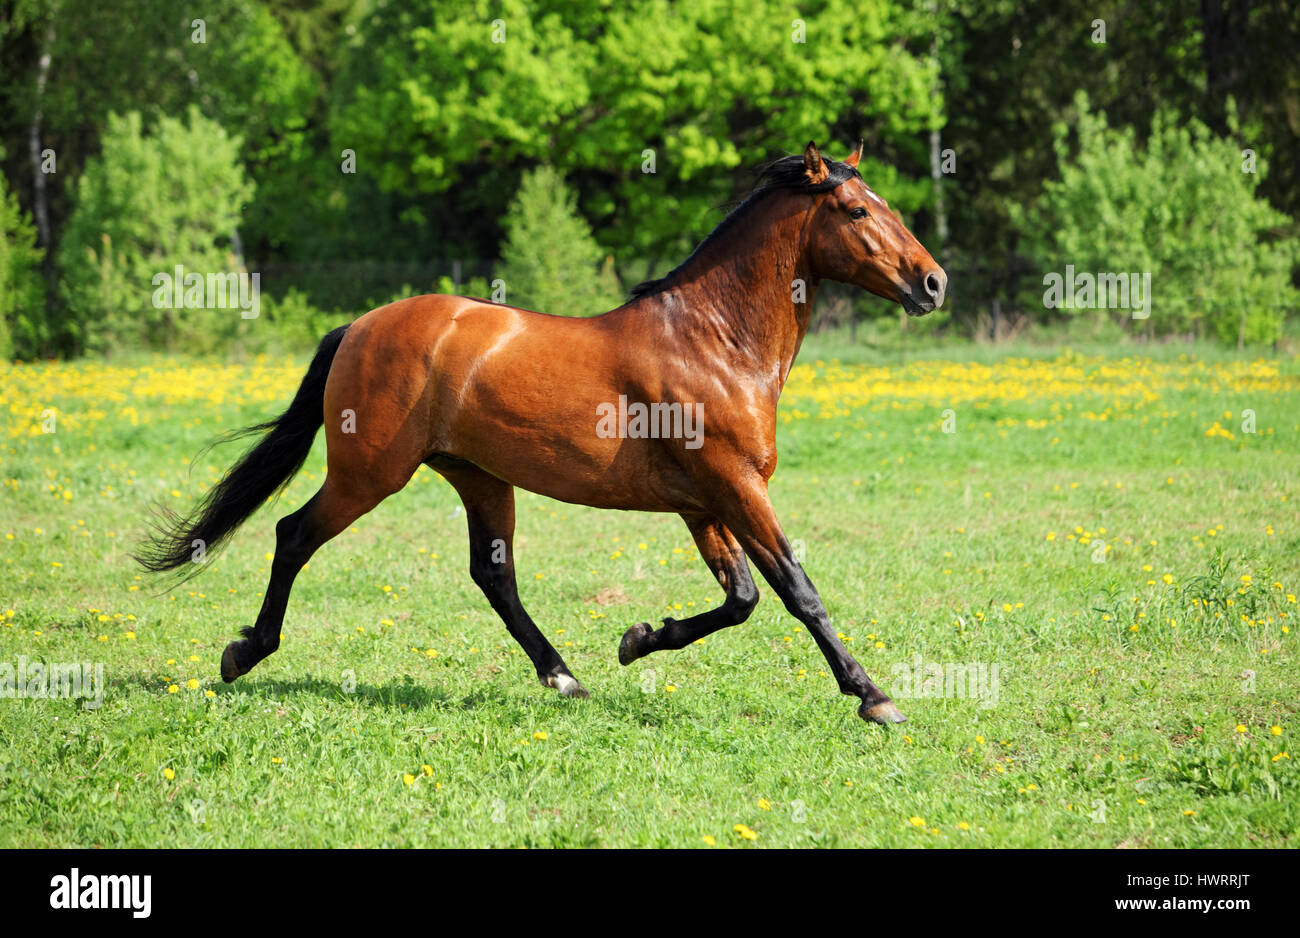 Thoroughbred horse stallion runs through tall grass field Stock Photo